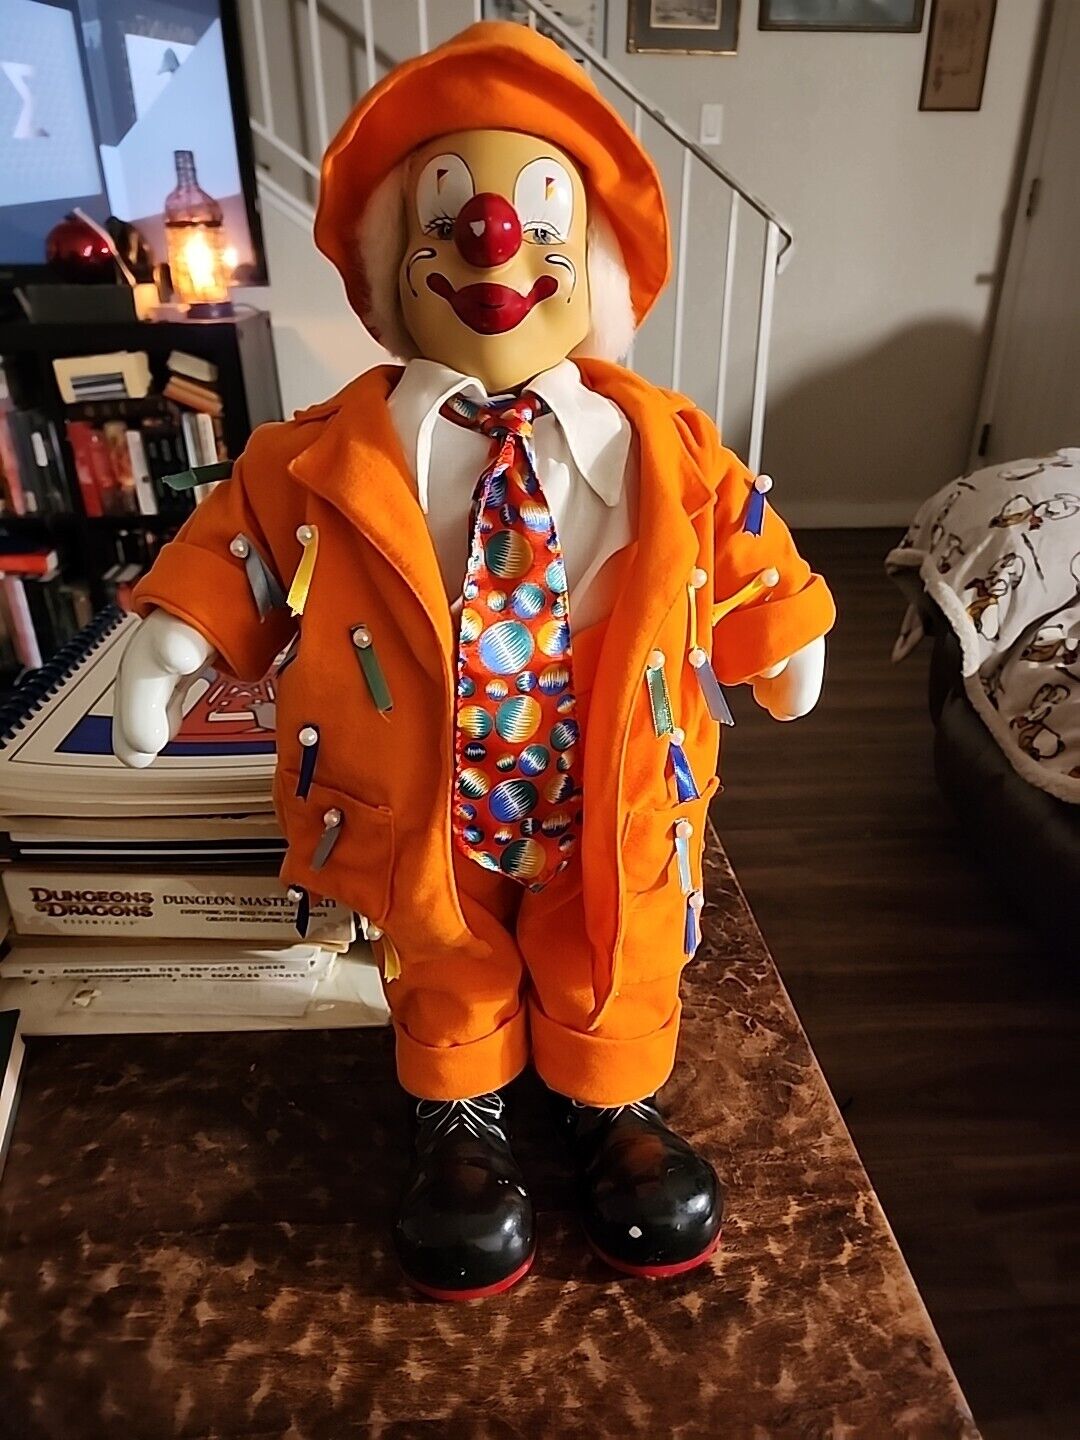 Vintage Rite-Aid Clown Orange With Porcelain Hands Feet Head 24